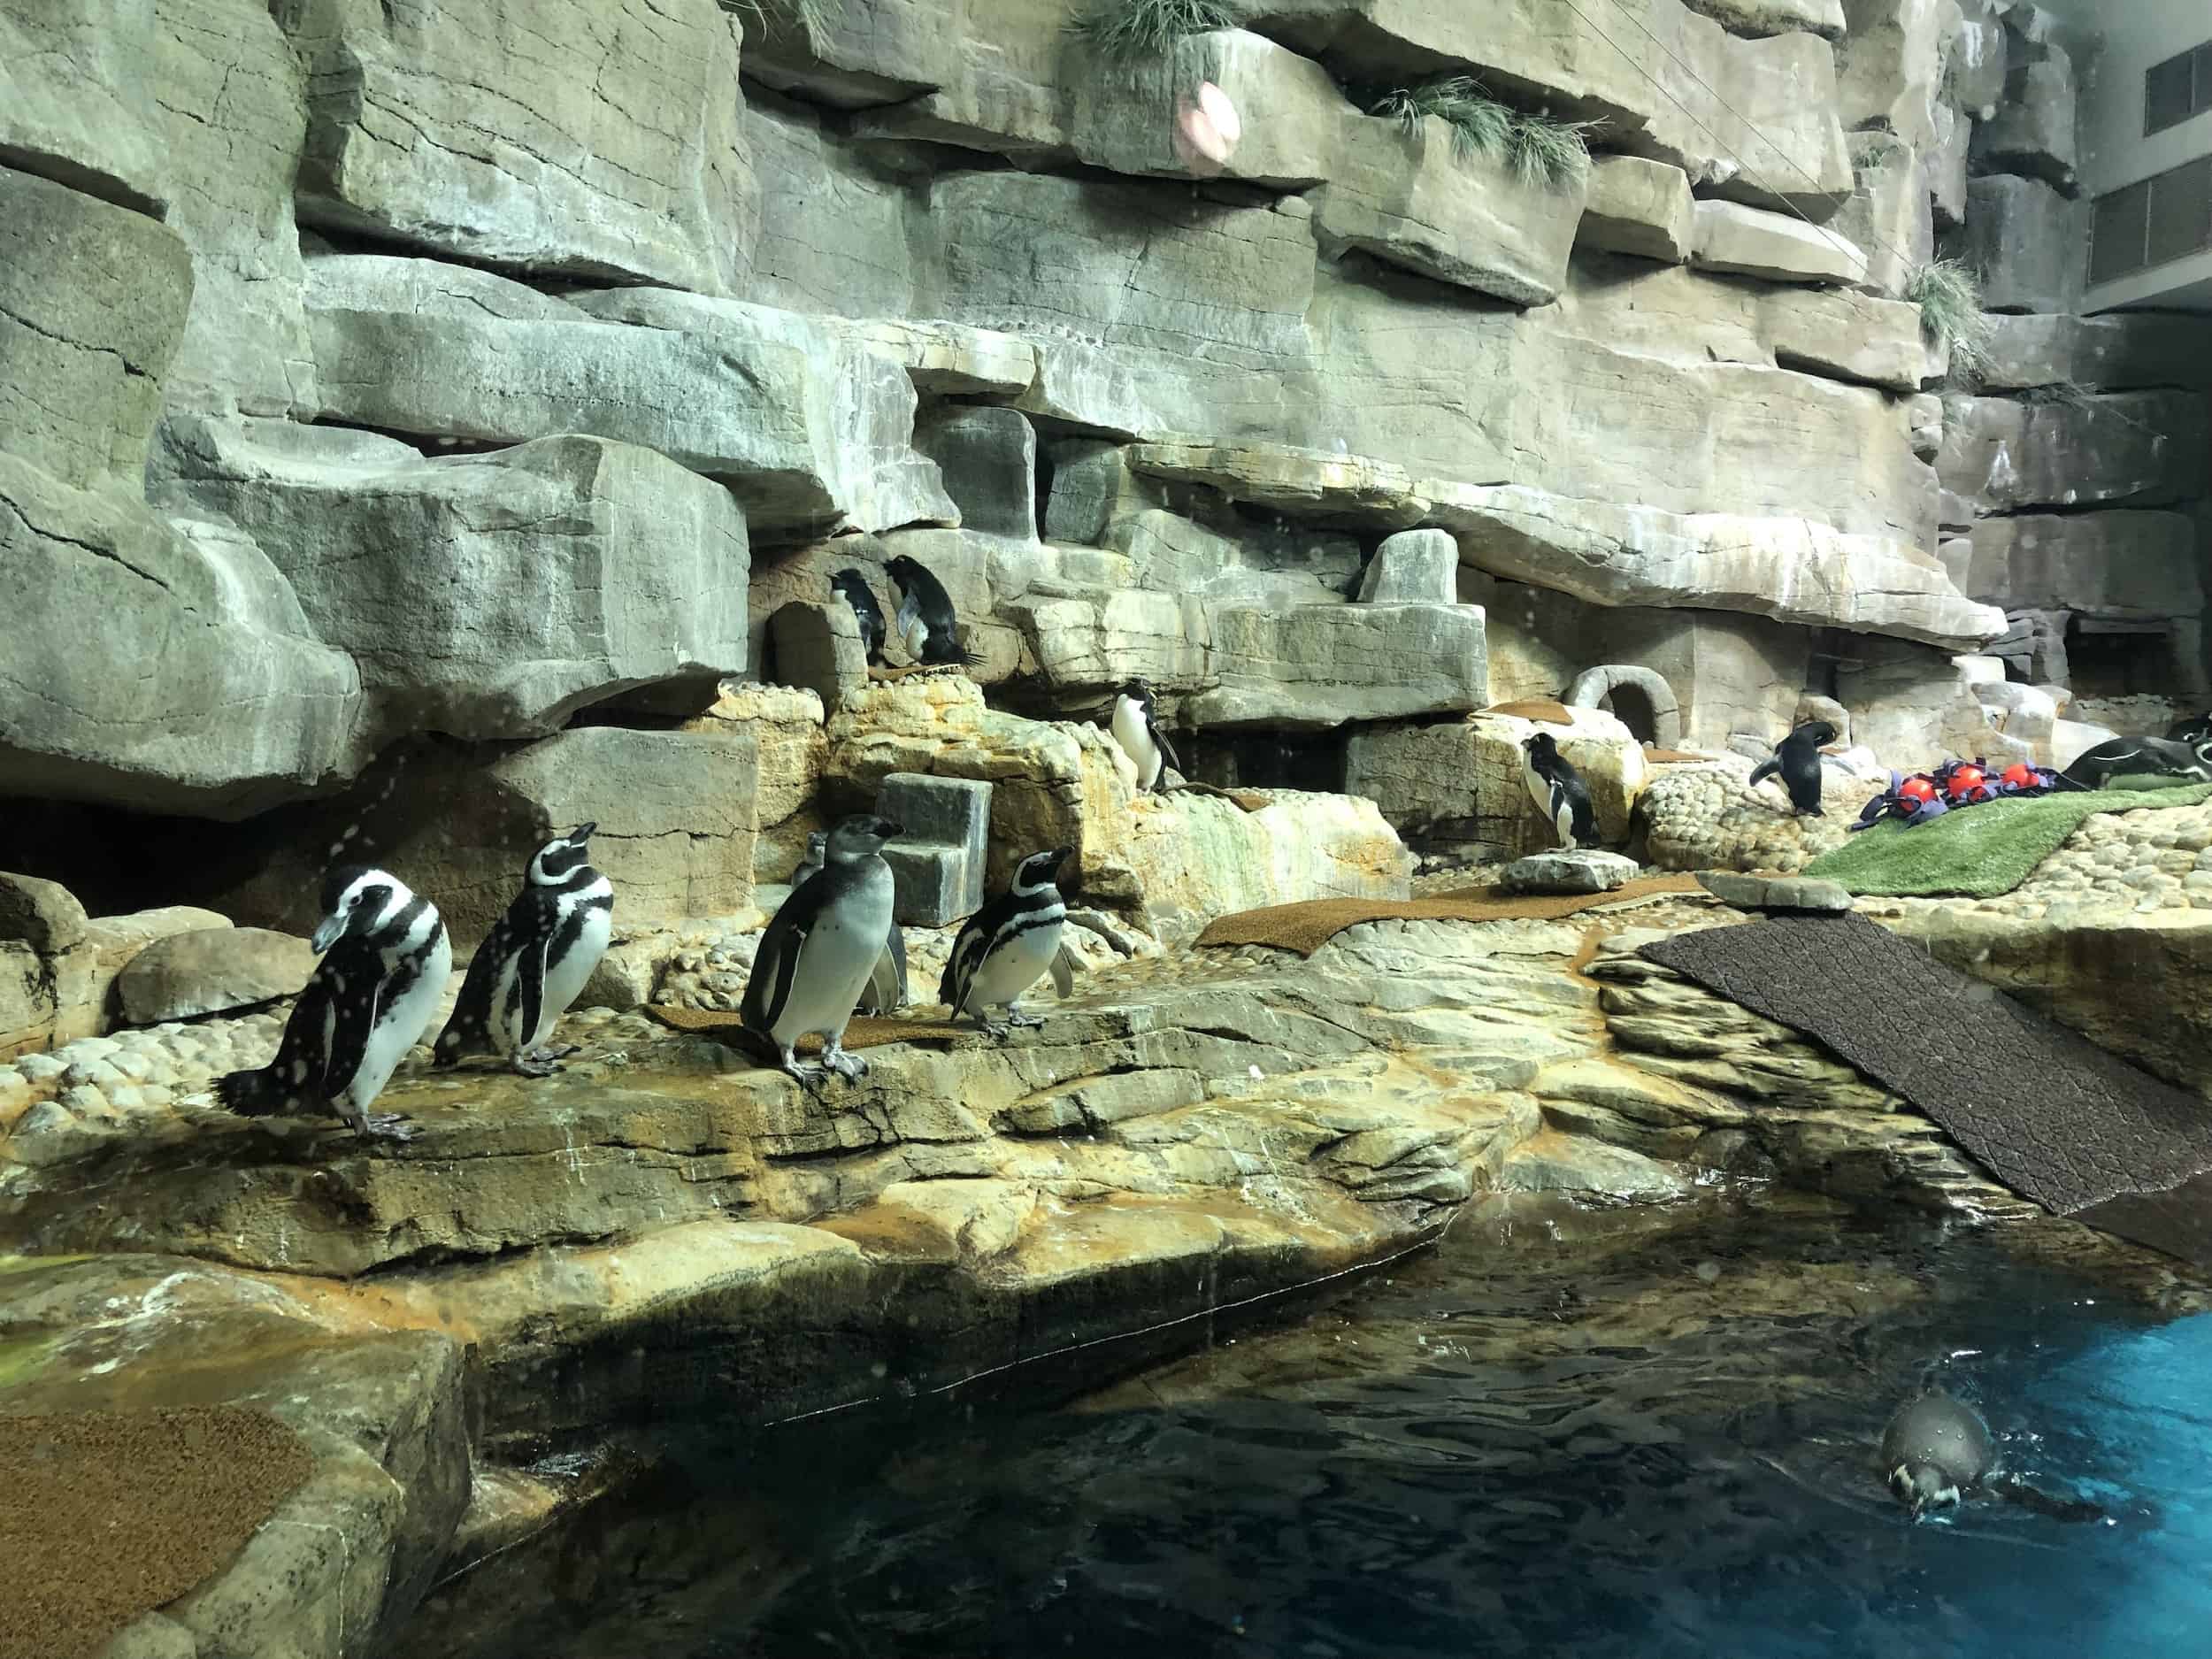 Magellanic penguins in the Polar Play Zone at the Shedd Aquarium in Chicago, Illinois